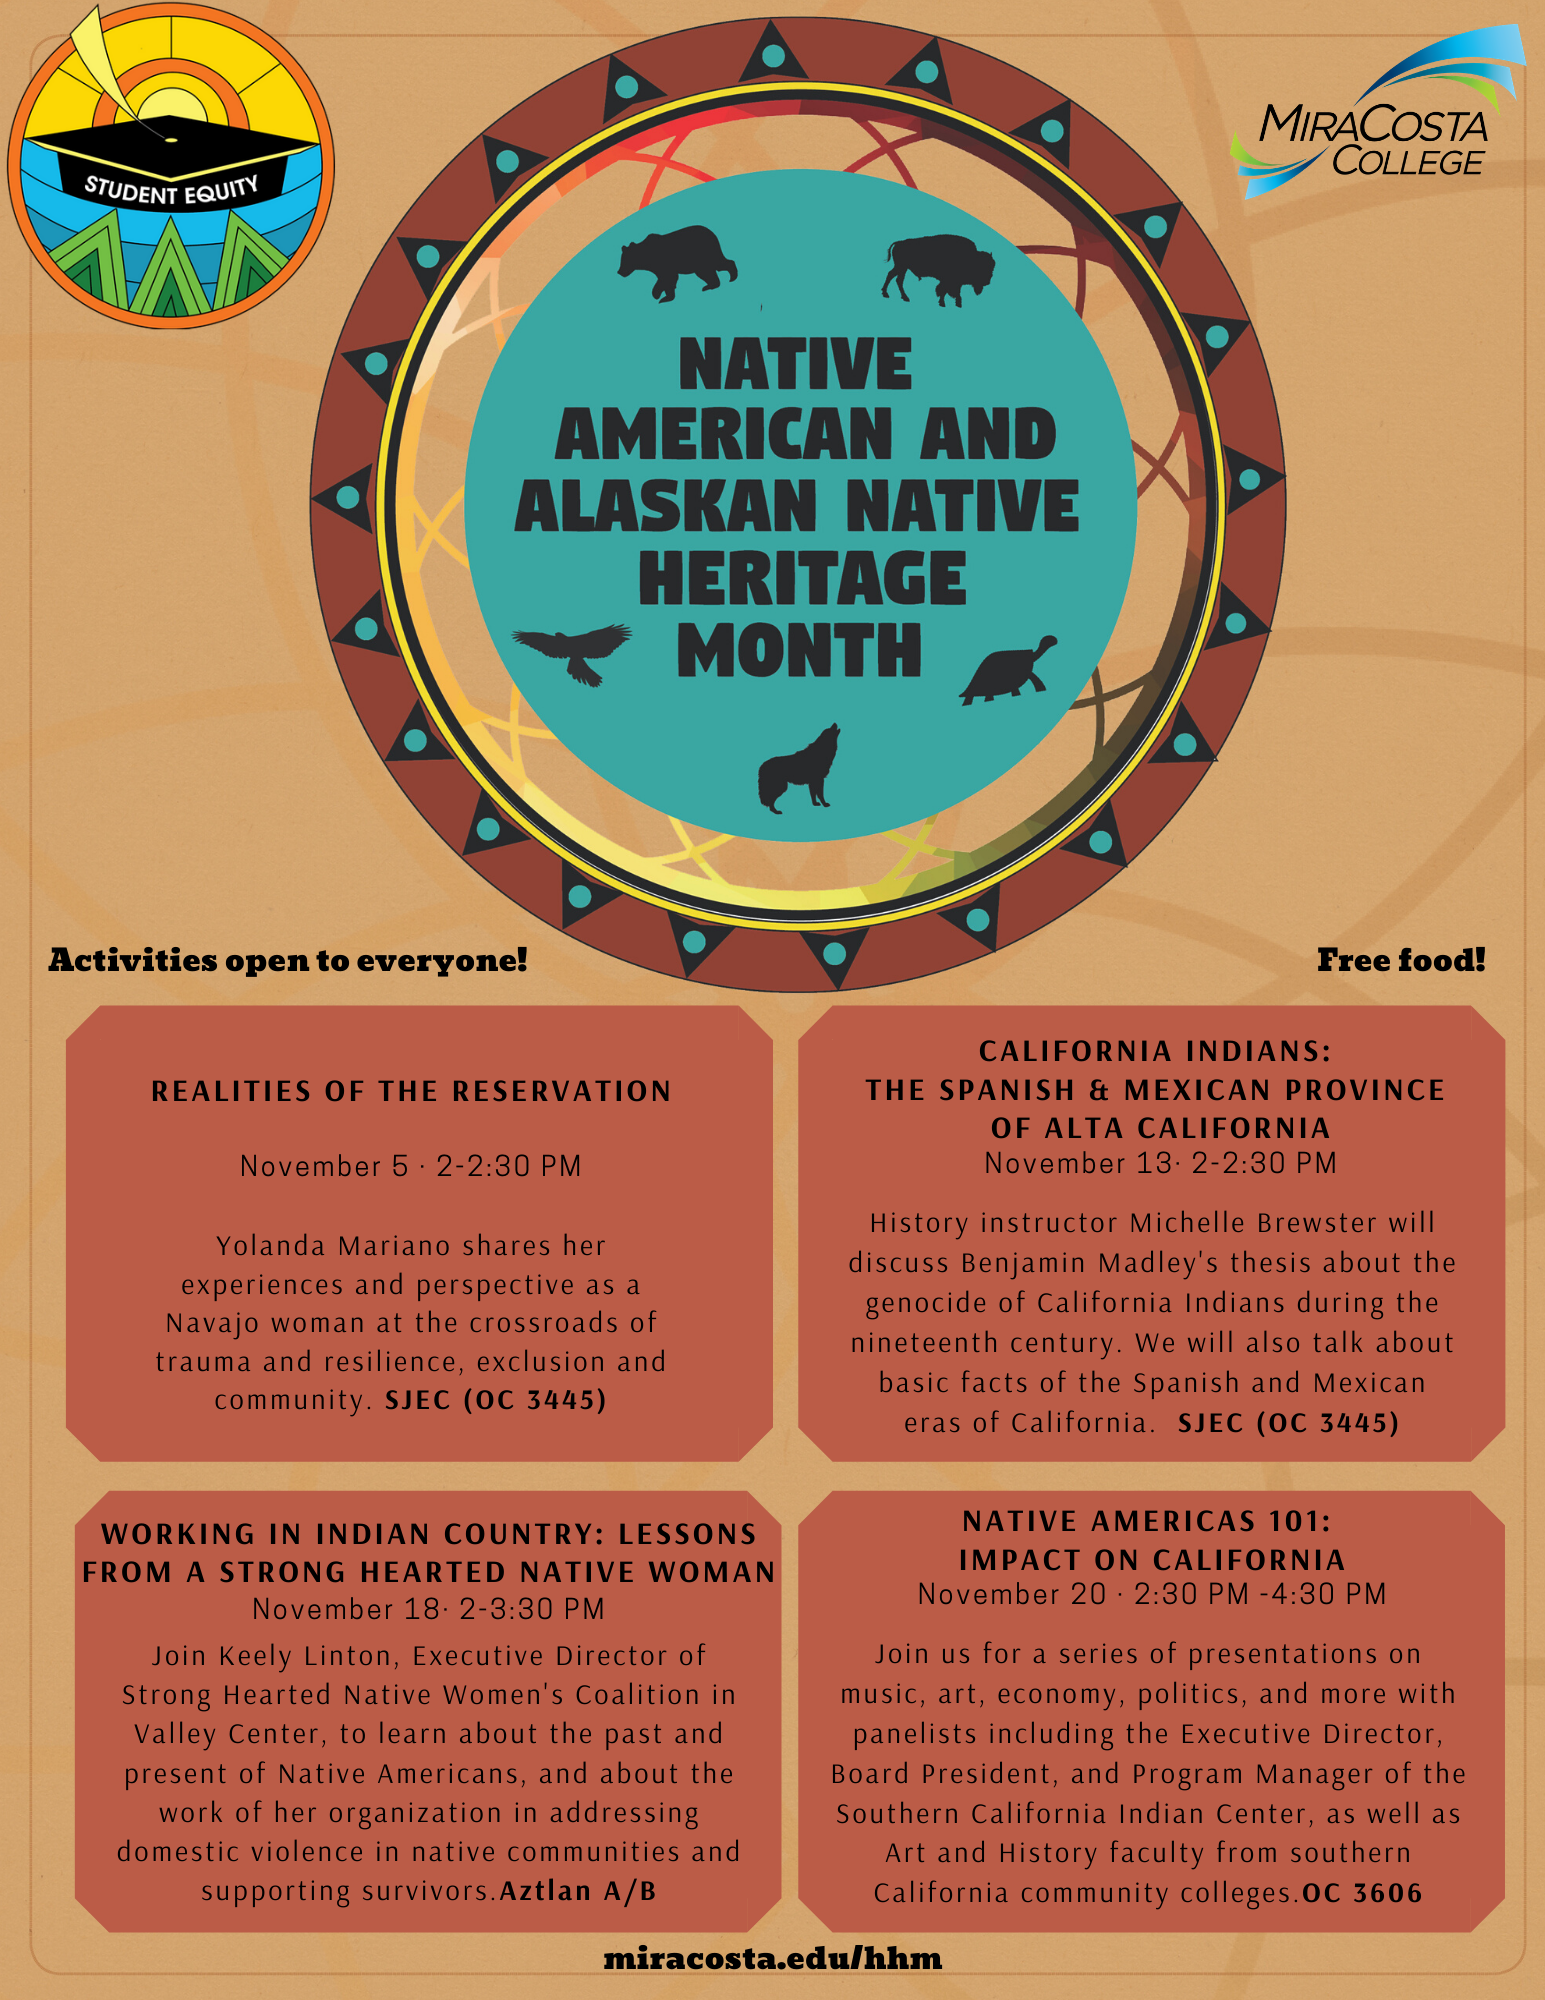 Native American & Alaskan Native Heritage Month Background Image